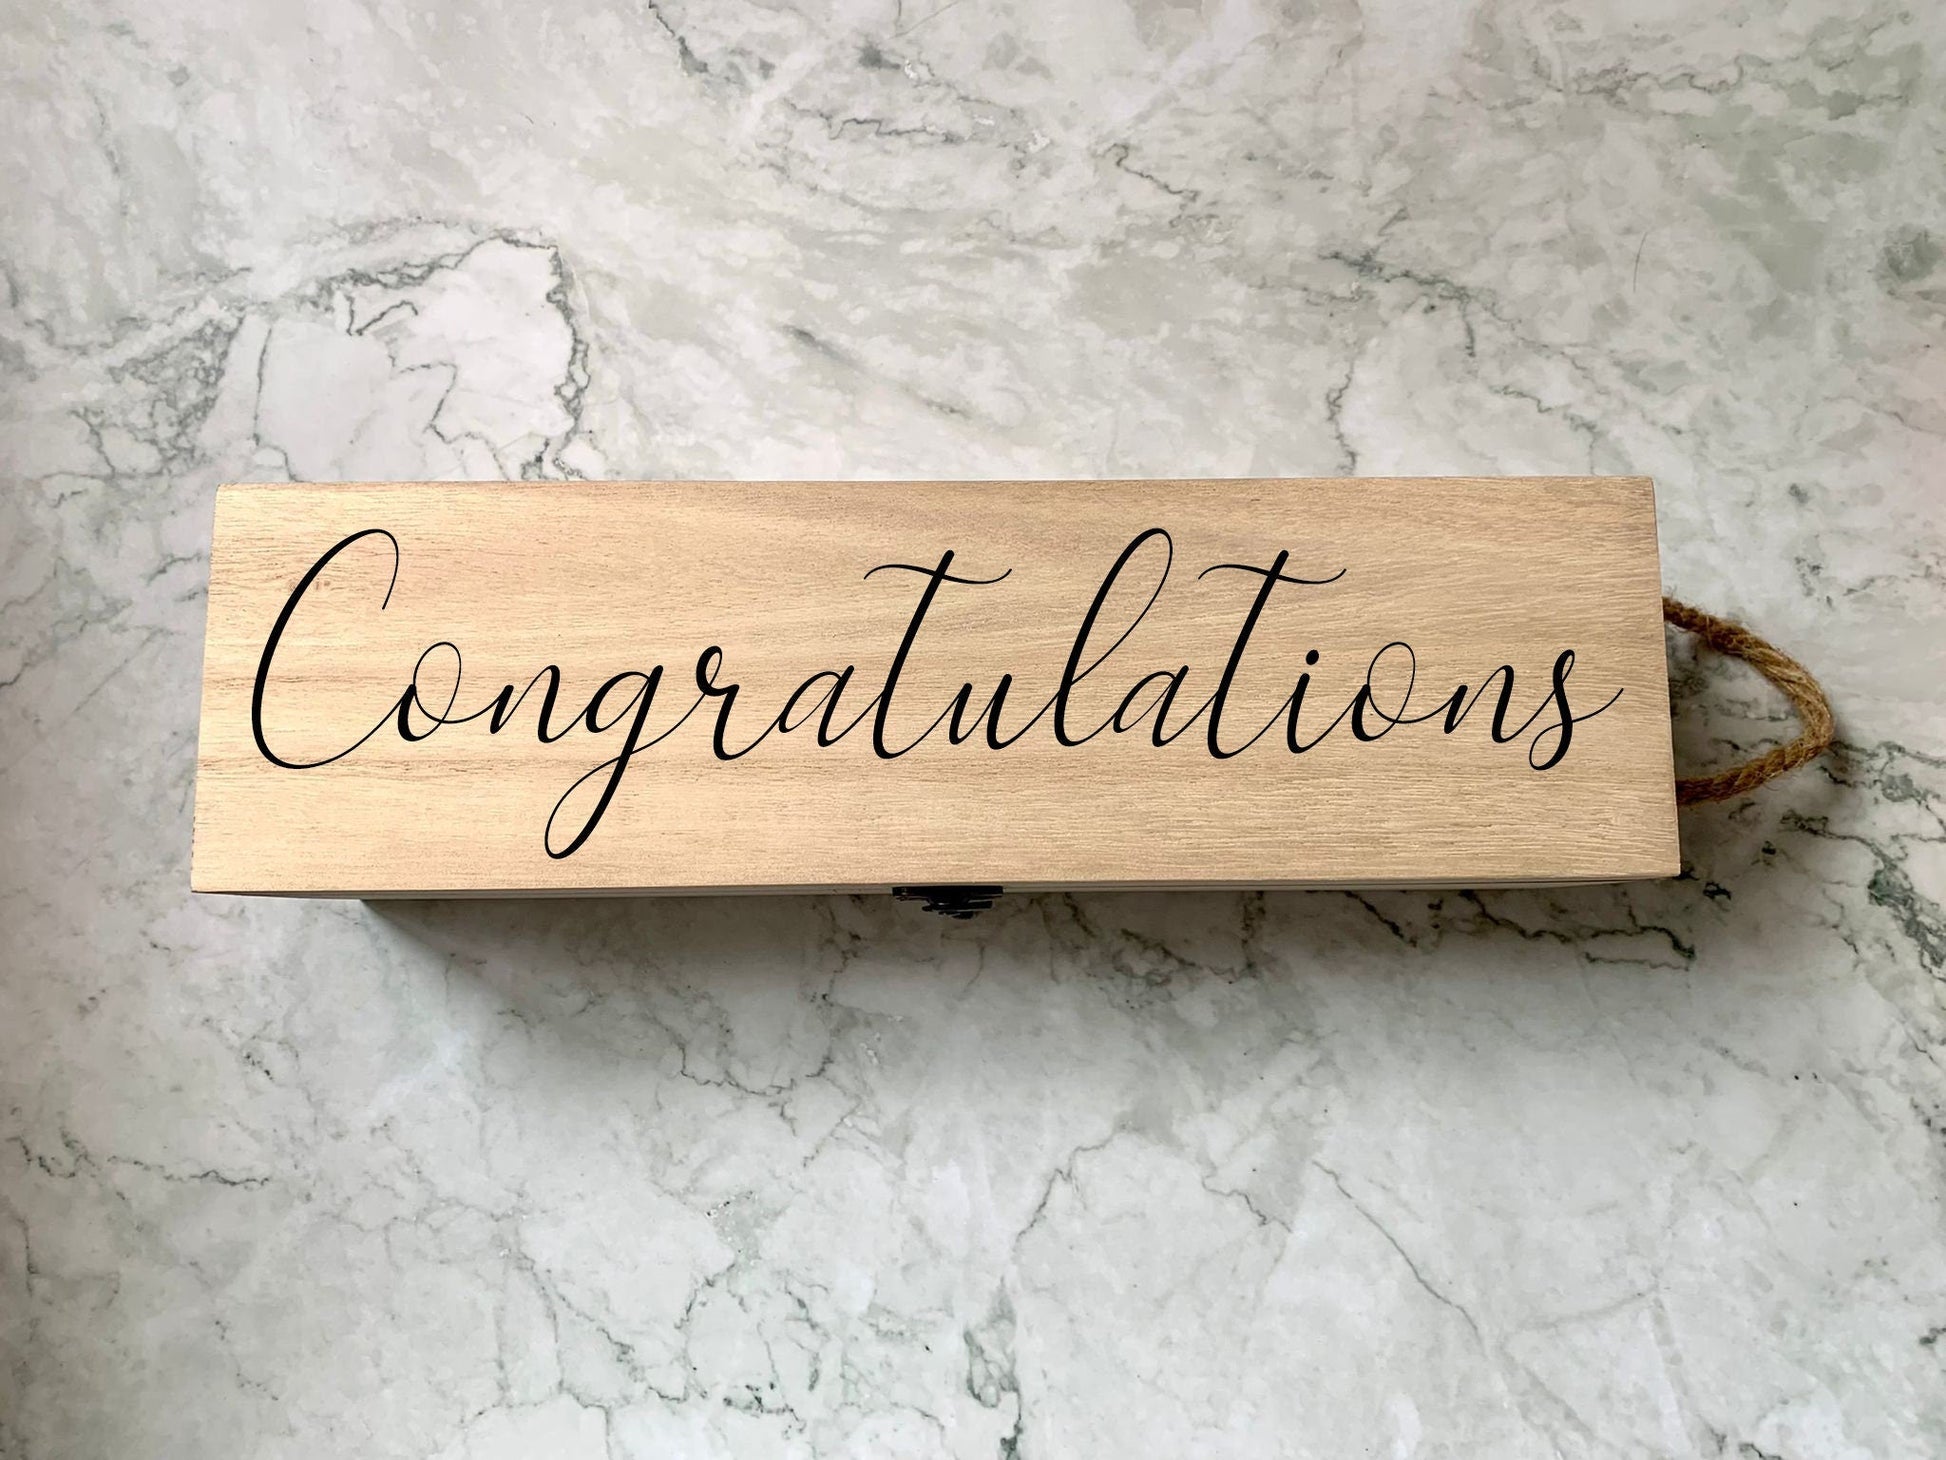 Congratulations Engraved Wooden Wine Bottle Gift Box - Resplendent Aurora